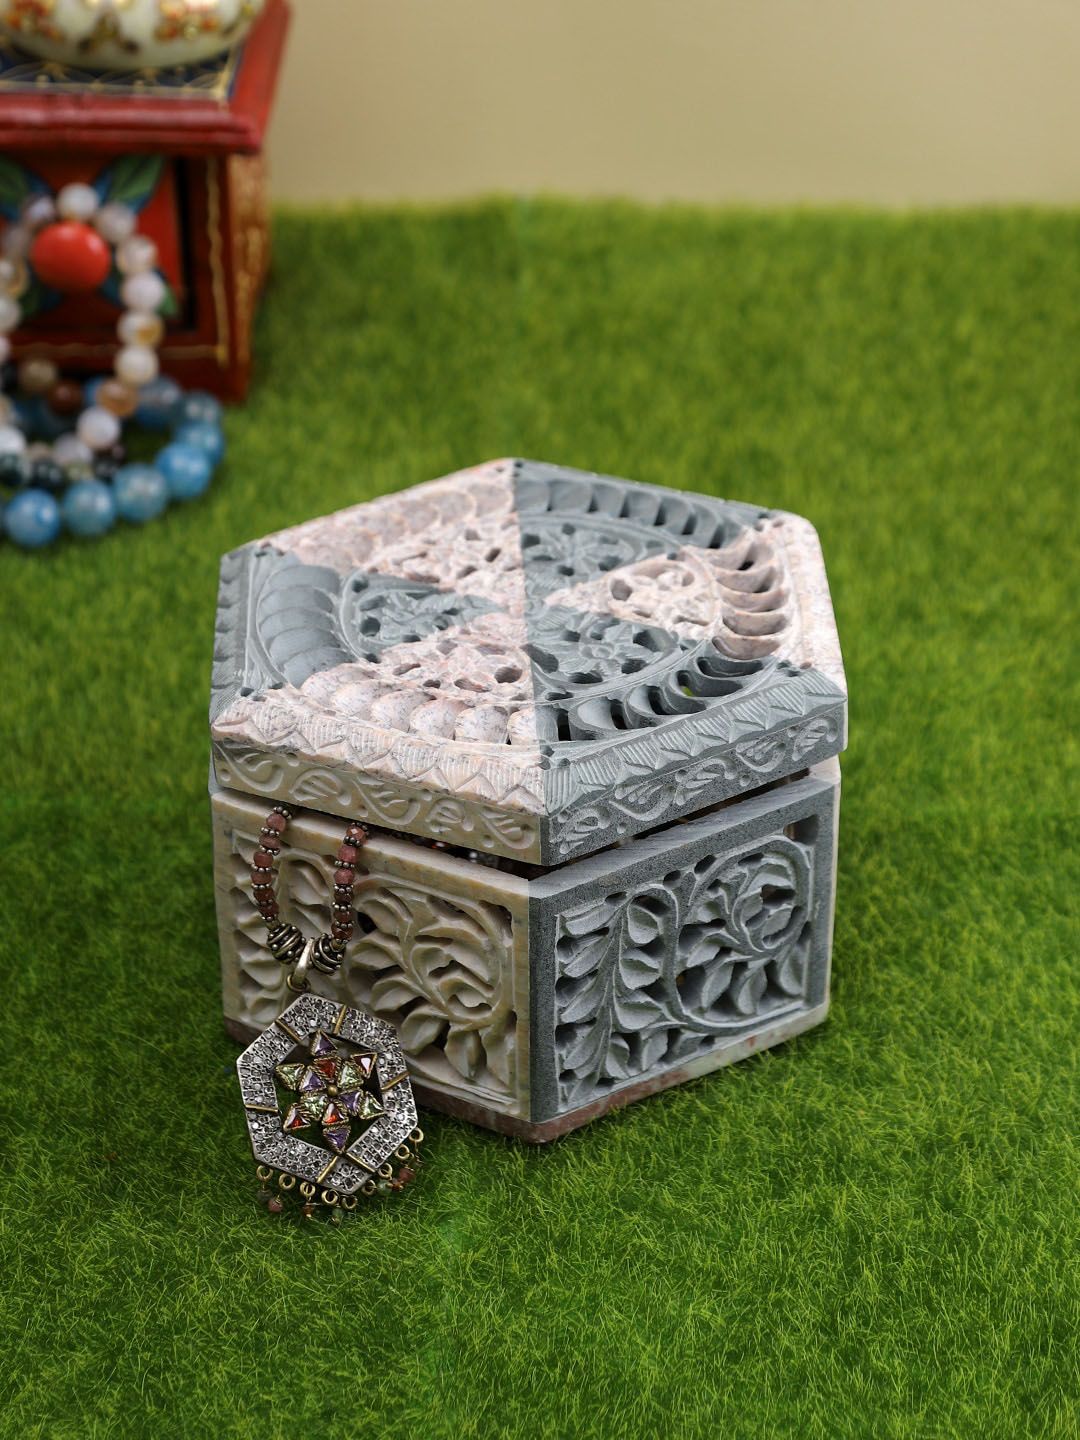 Aapno Rajasthan Grey Textured Hexagonal Jewelry Box Organizer Price in India